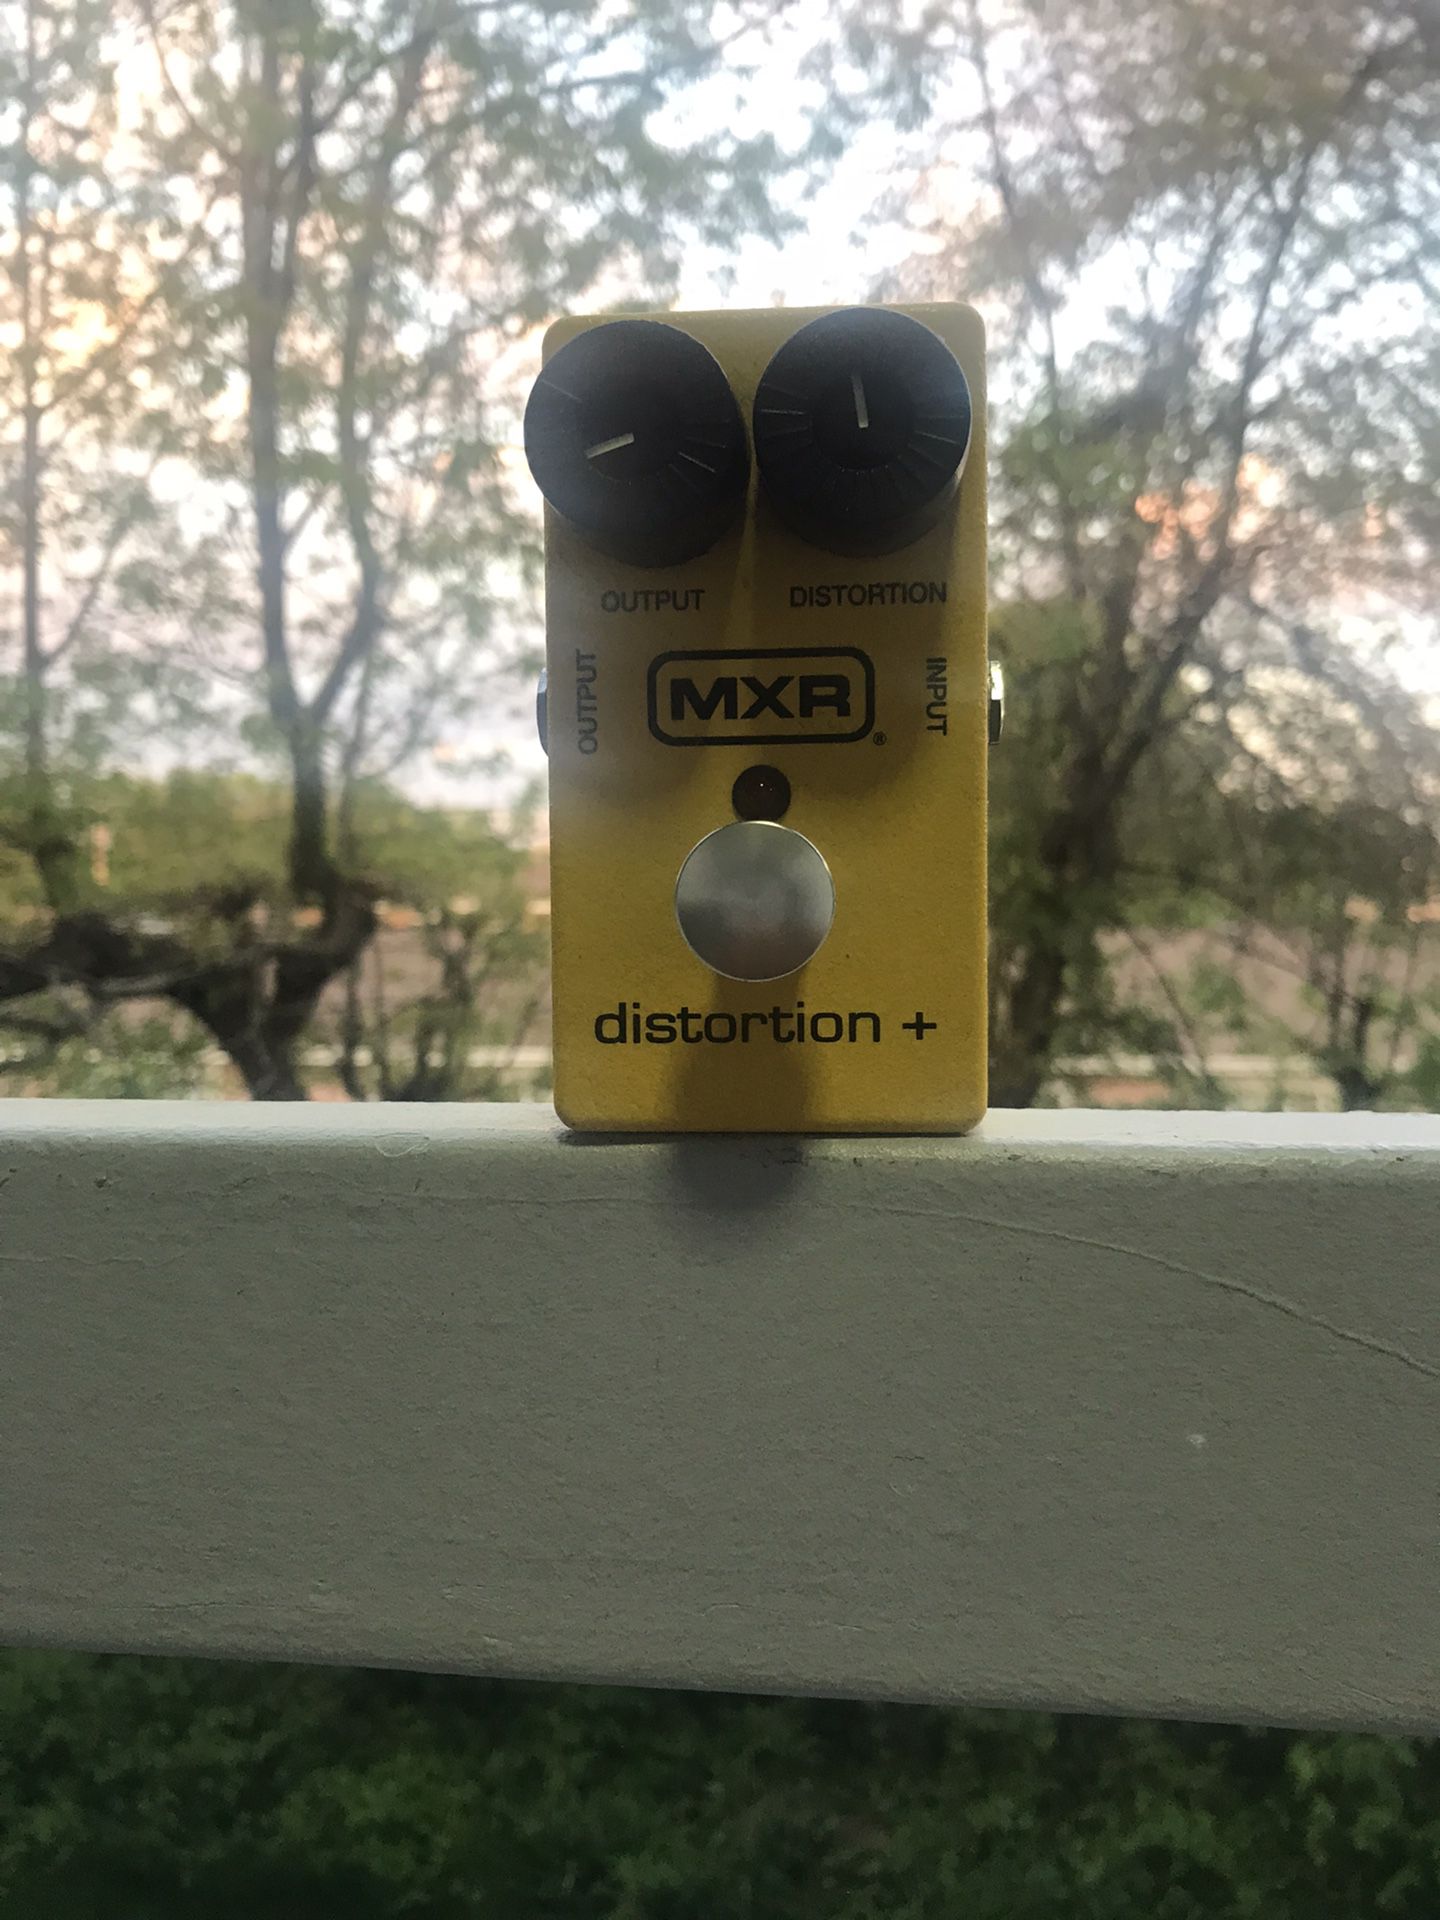 MXR M104 Distortion+ Guitar Pedal